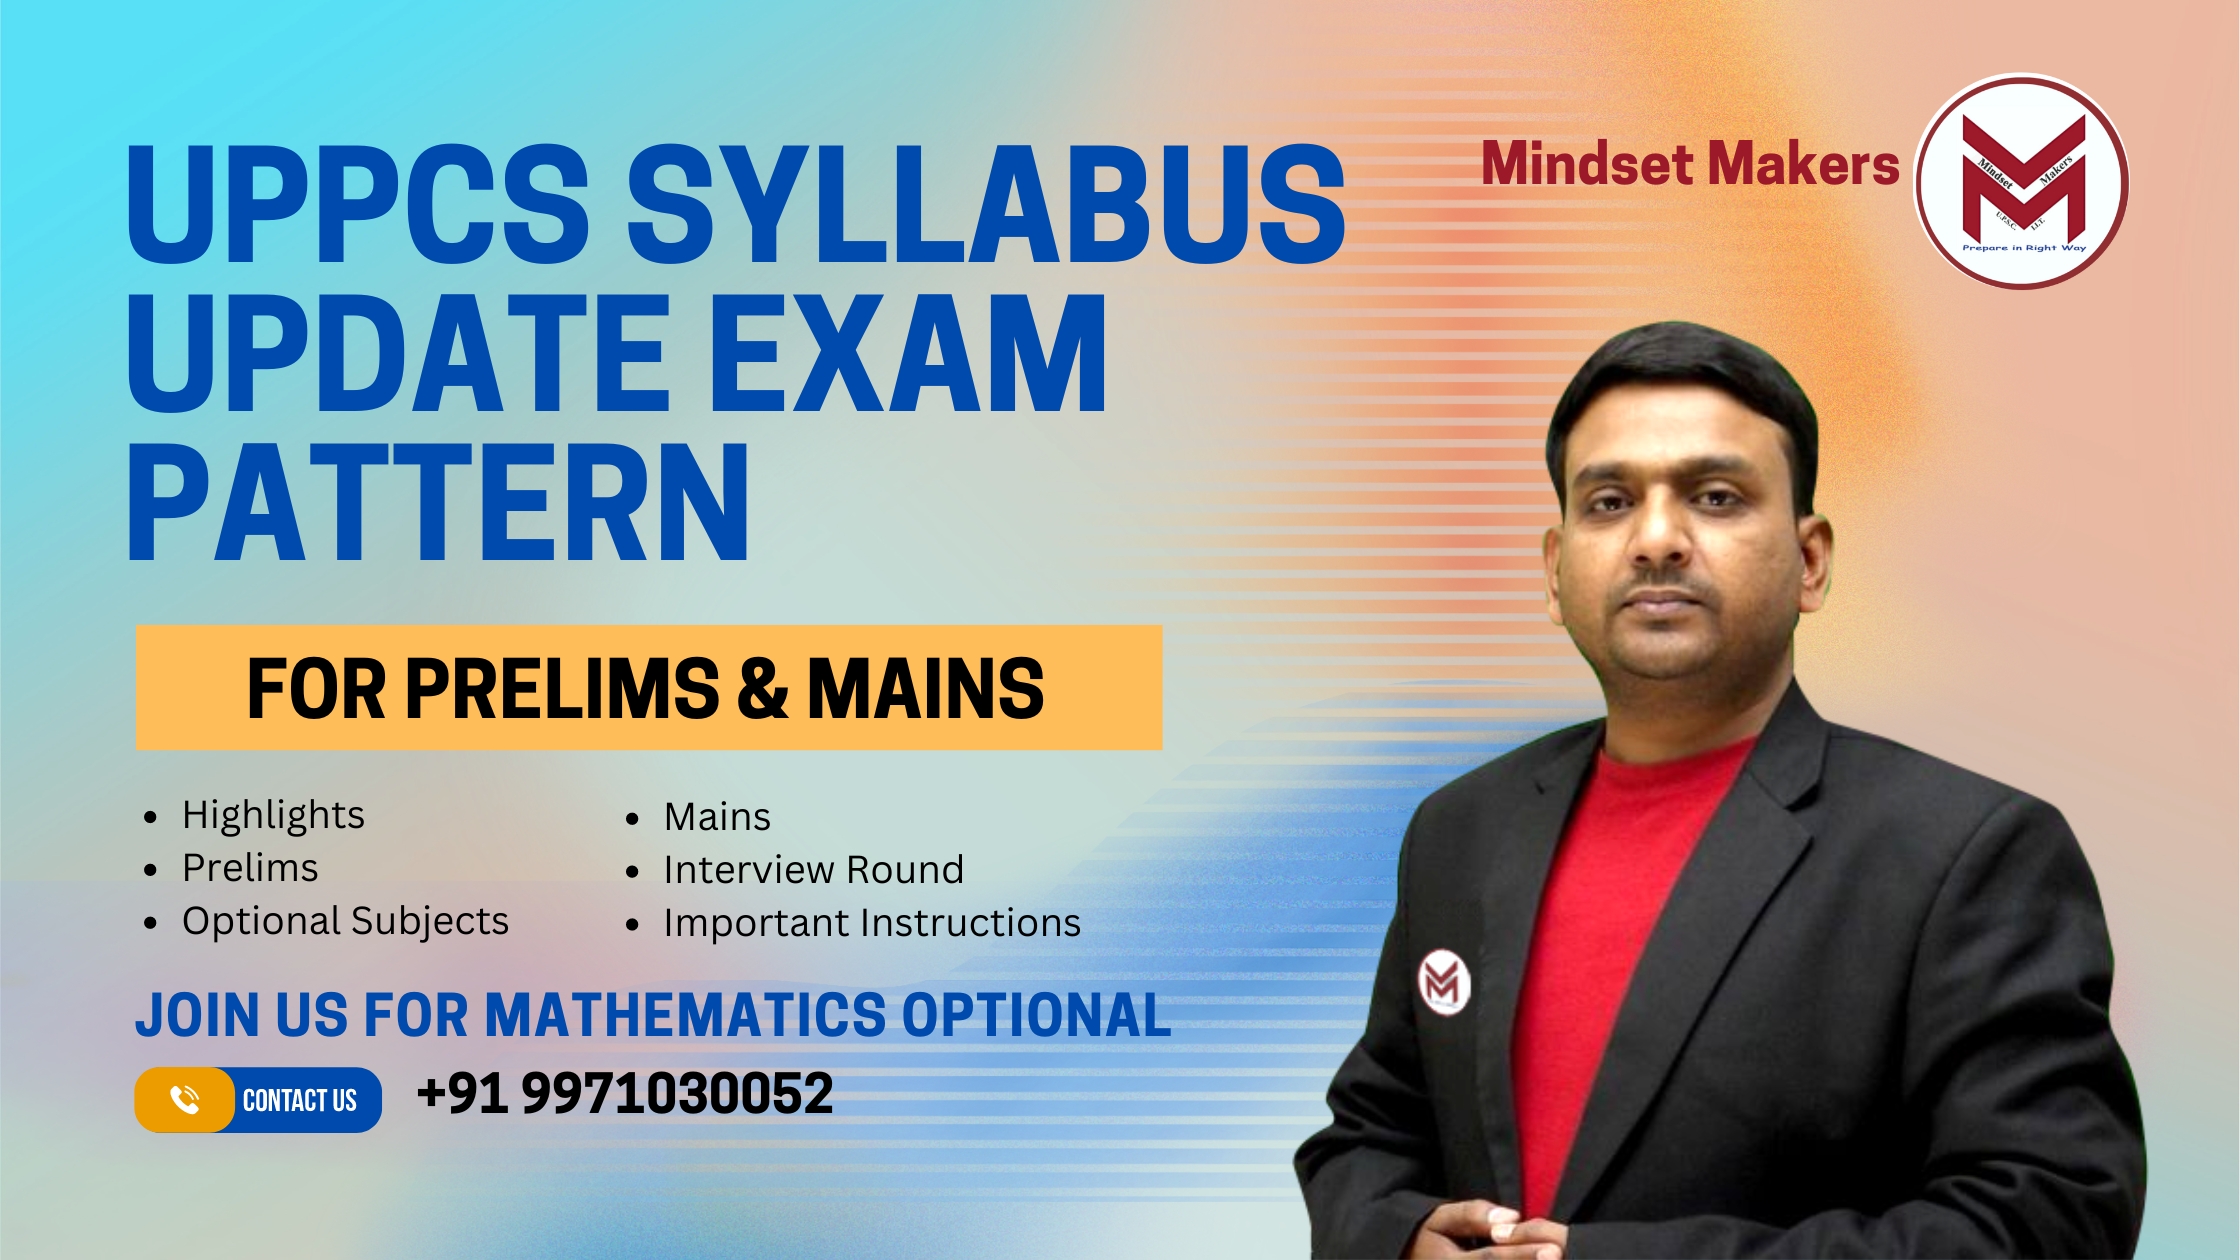 UPPCS Syllabus Update Exam Pattern for Prelims & Mains